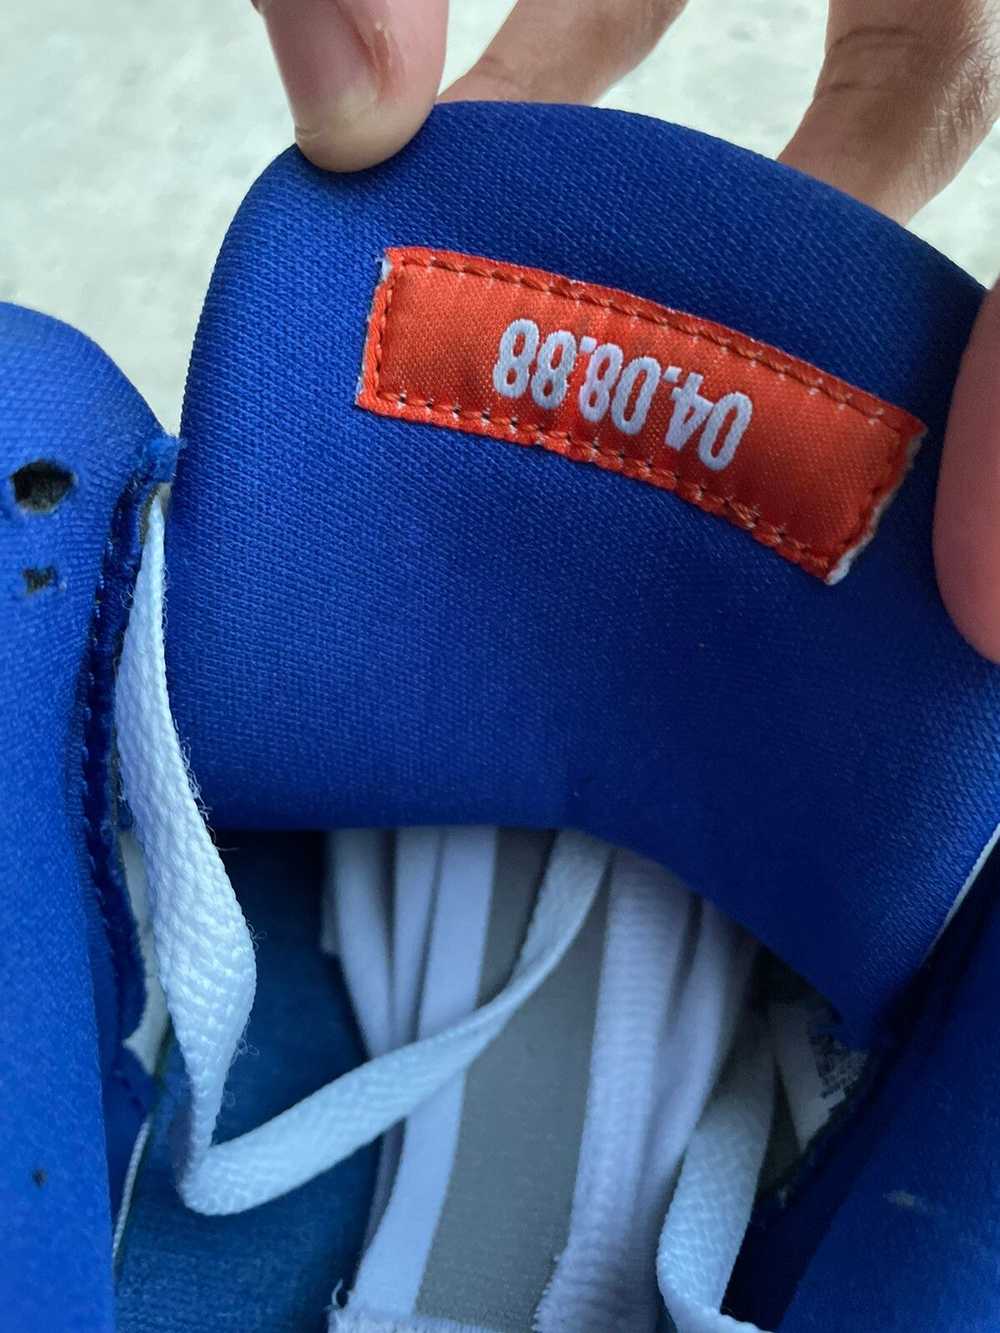 Jordan Brand × Nike Jordan 3 knicks - image 8